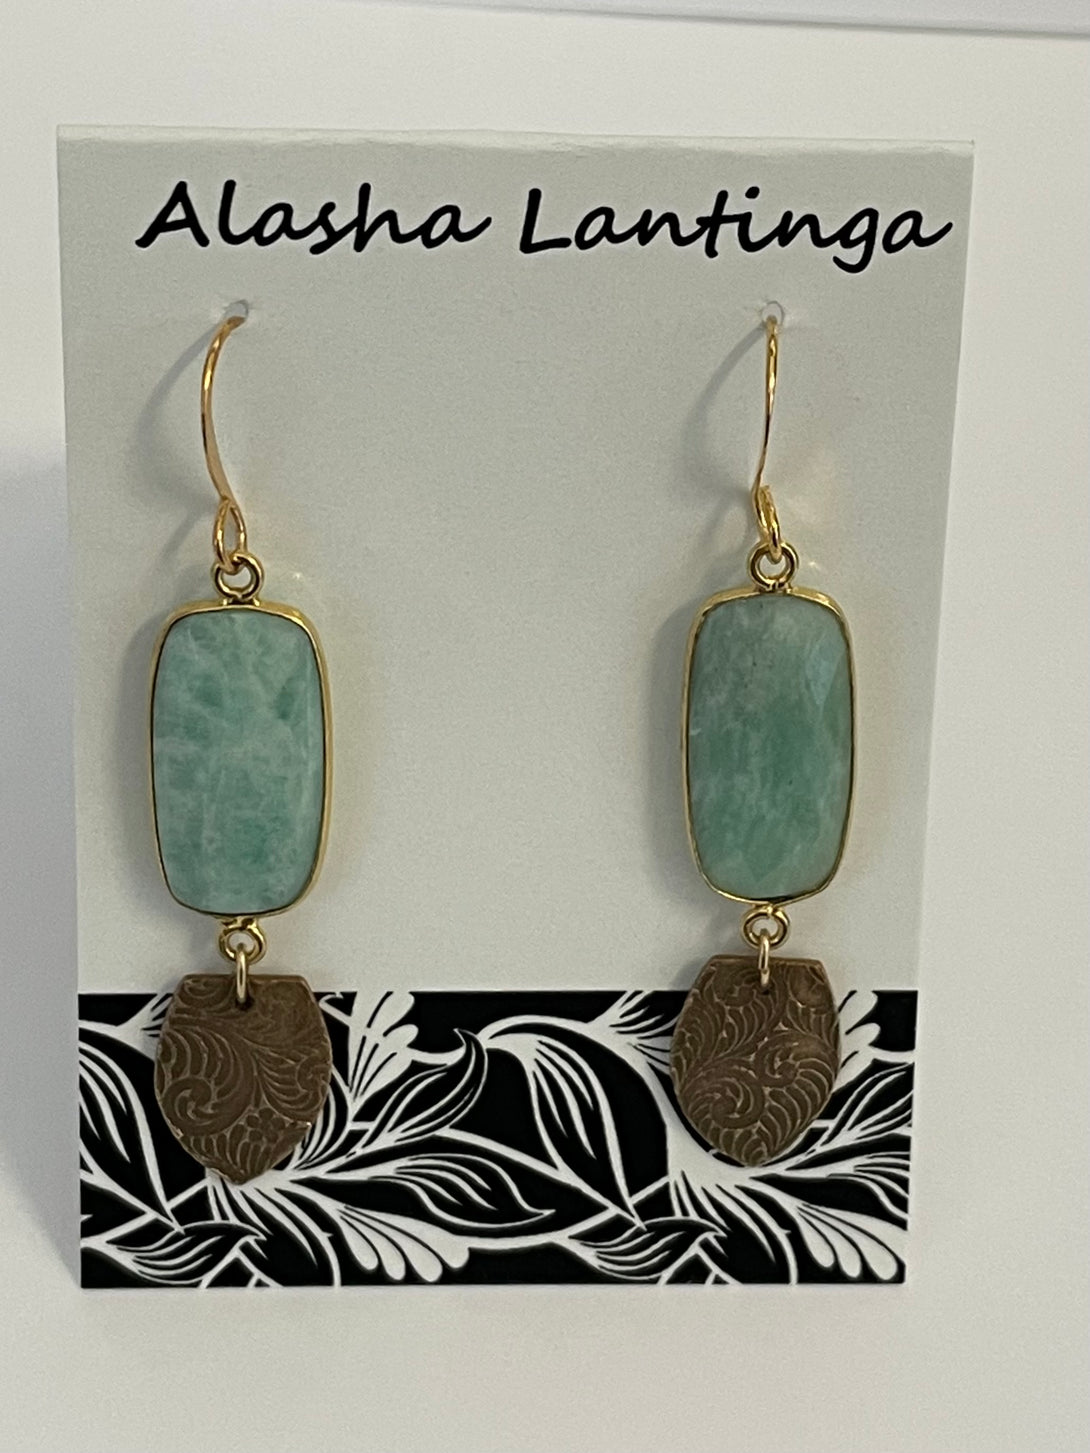 Alasha Lantinga - Earrings - Amazonite rectangle with copper shield - Alasha Lantinga - McMillan Arts Centre Gallery, Gift Shop and Box Office - Vancouver Island Art Gallery